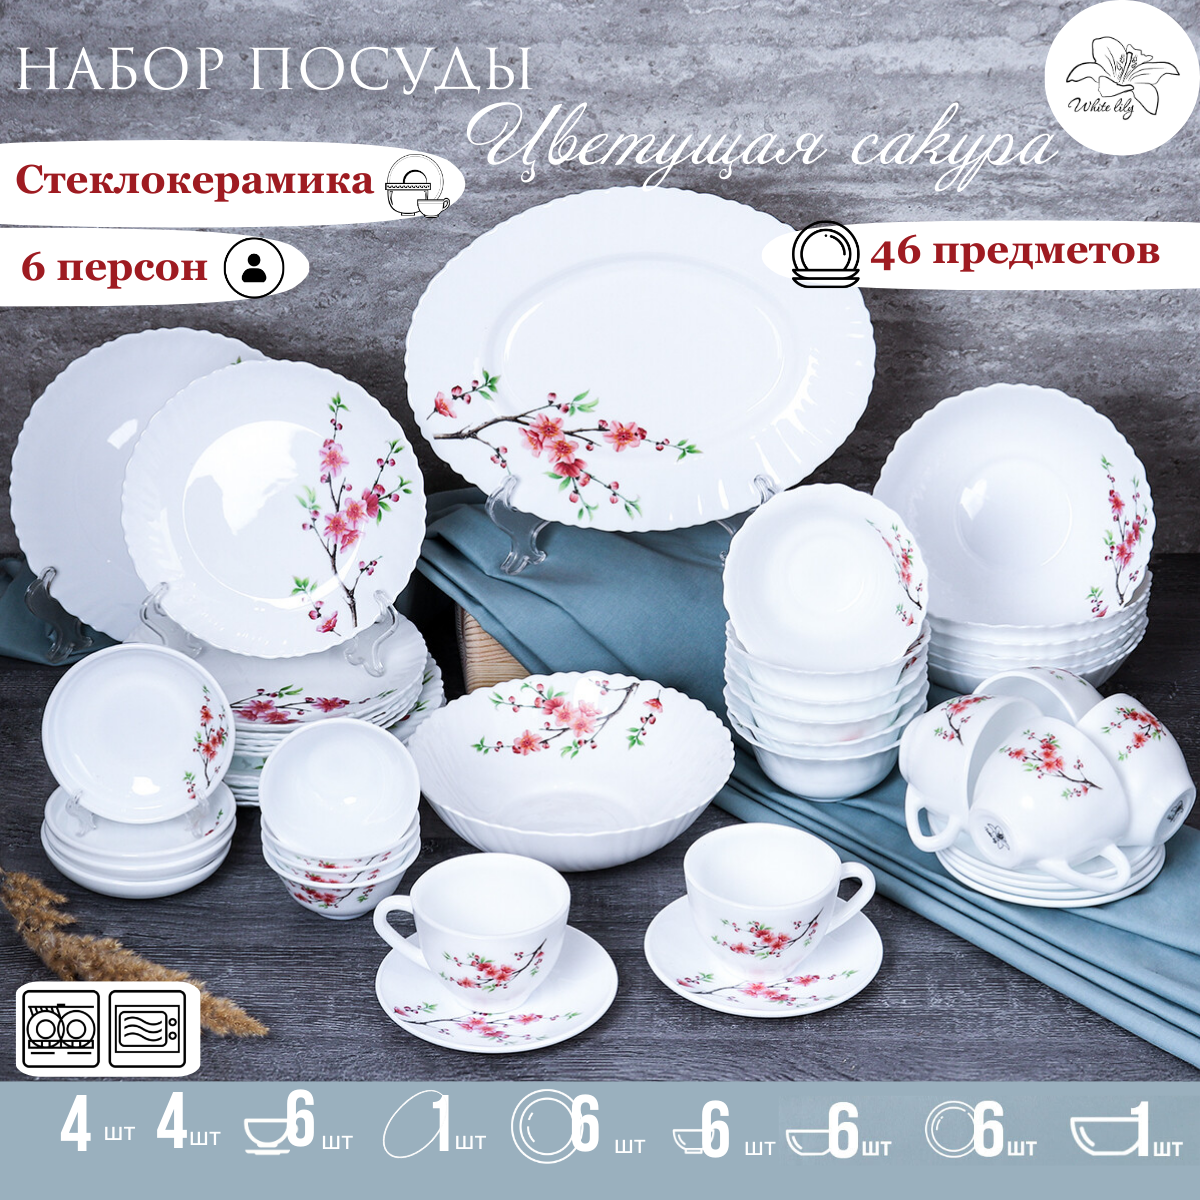 Набор посуды "Цветущая Сакура" от бренда "White Lily" на 6 персон, 46 предметов